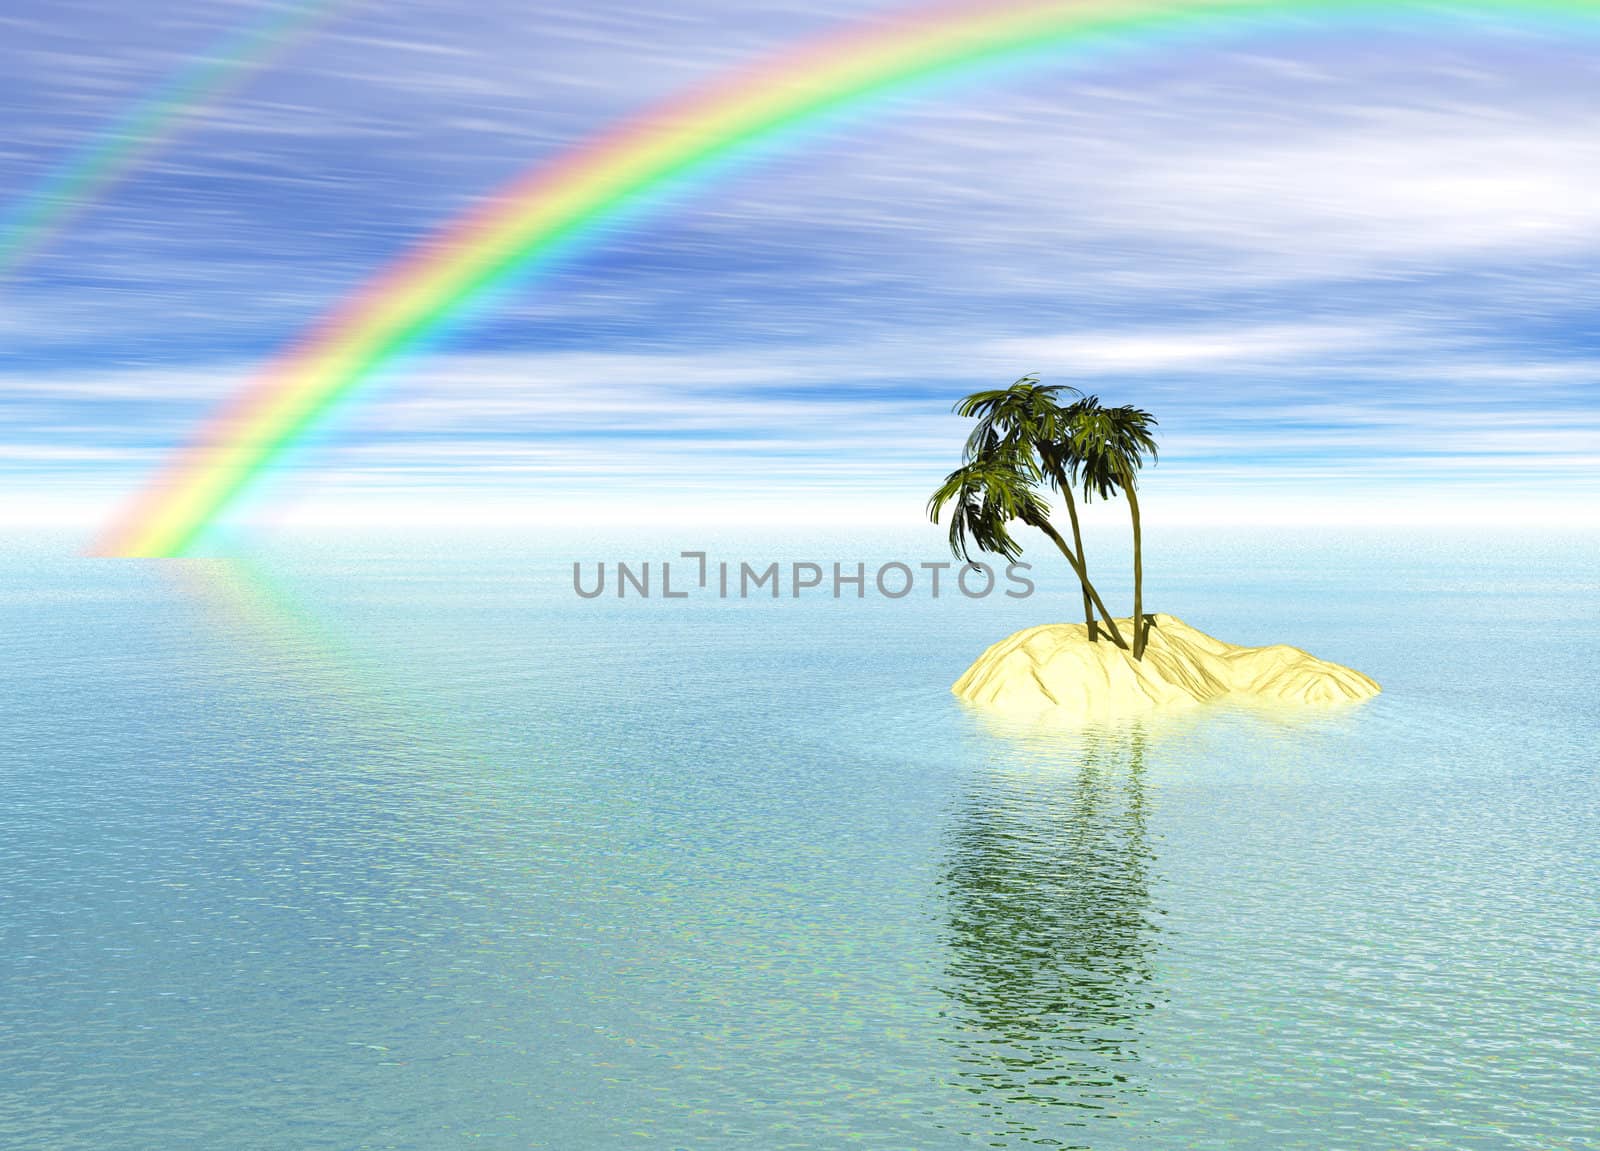 Romantic Desert Island with Palm Tree and Rainbow against the Horizon